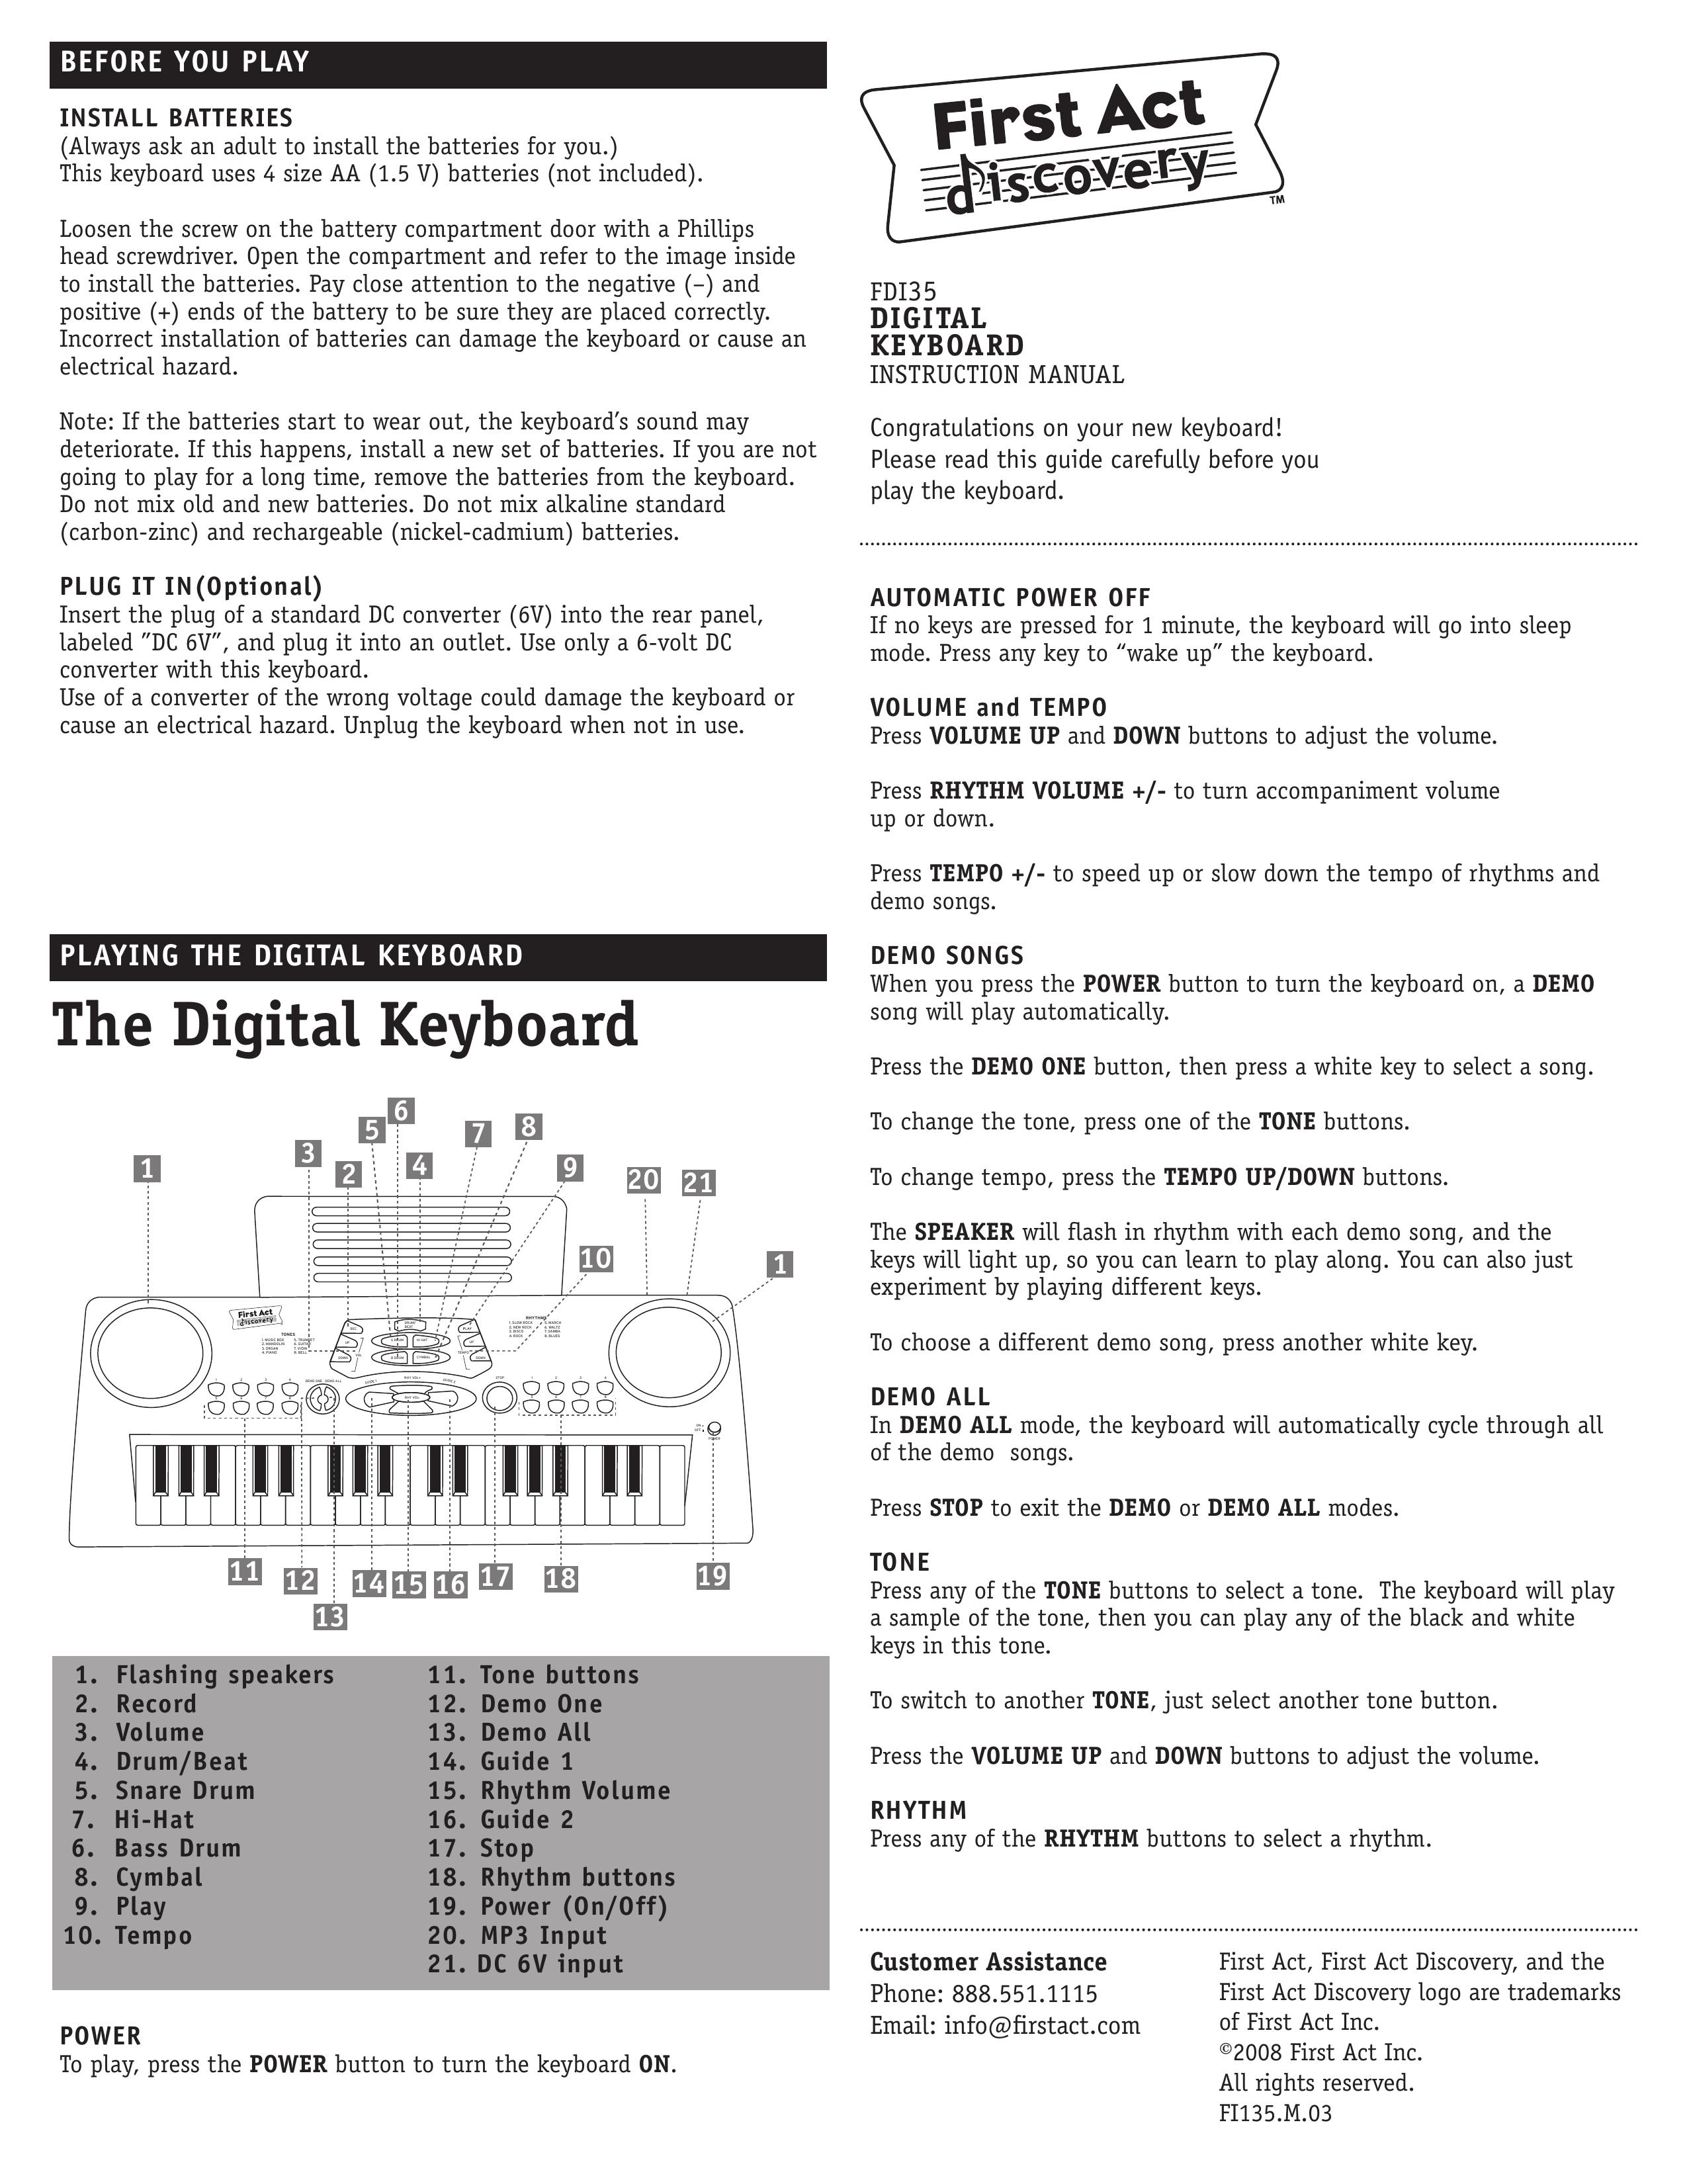 First Act FDI35 Electronic Keyboard User Manual